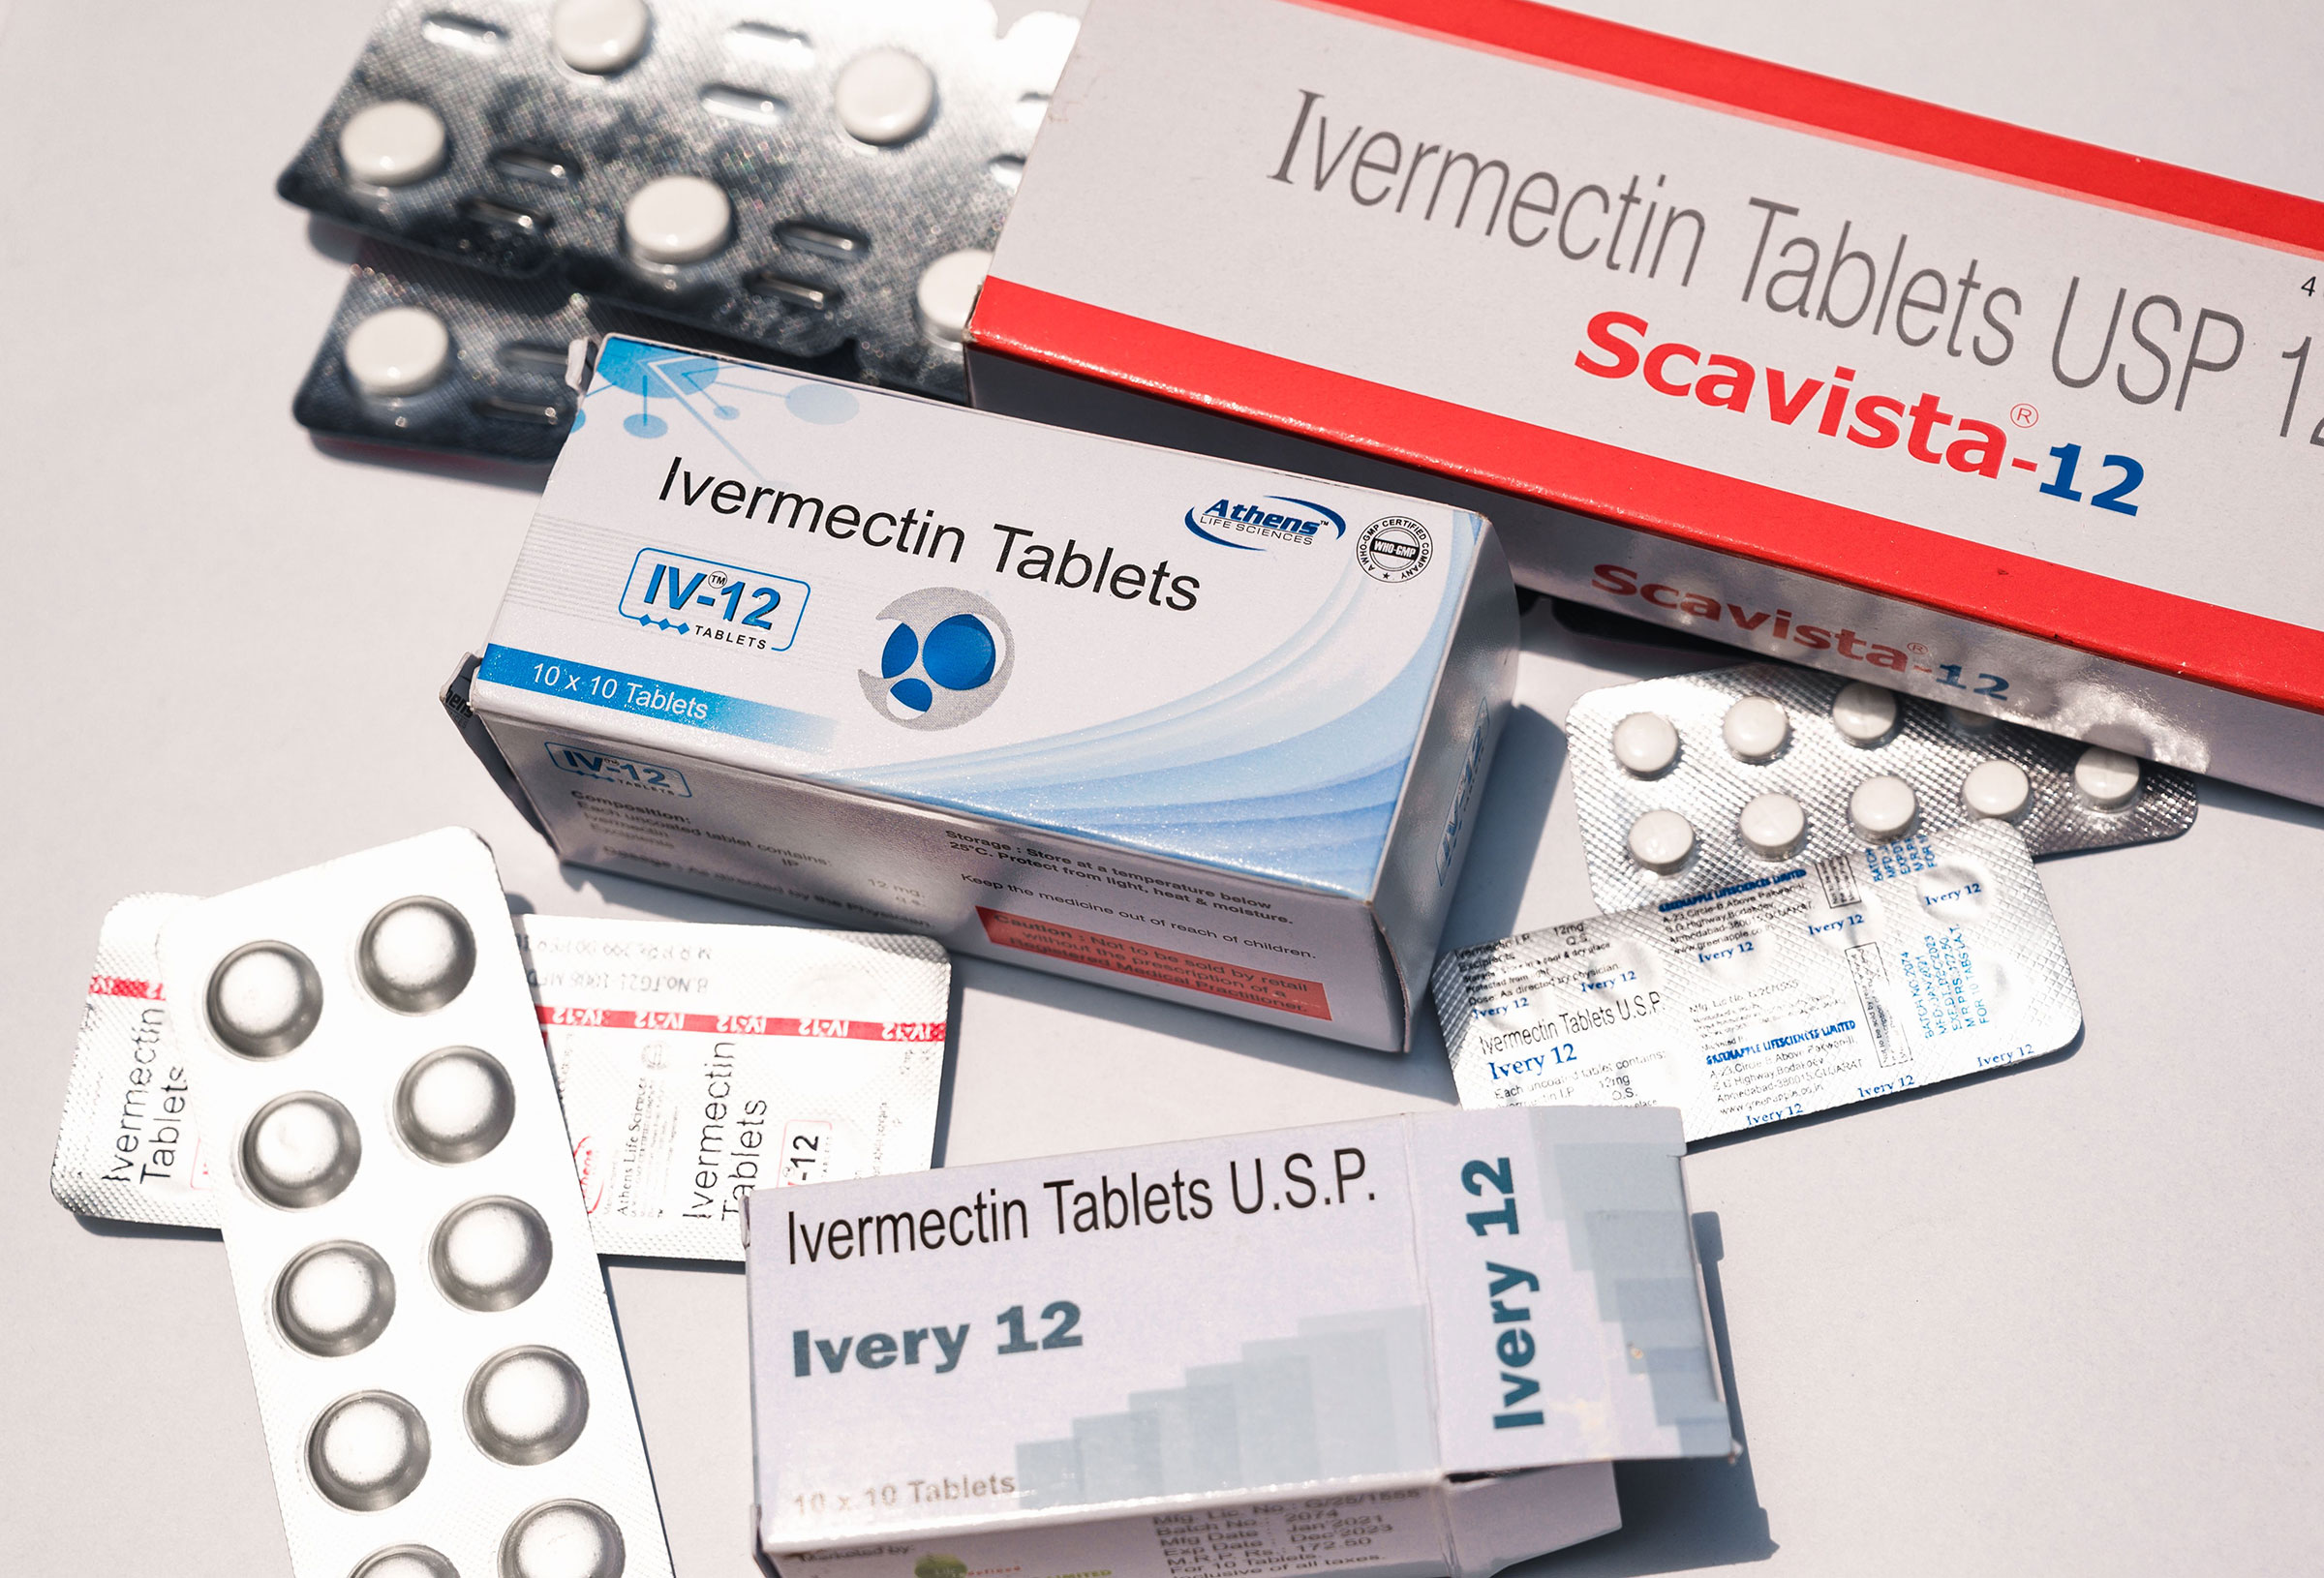 Ivermectin Drug For COVID, Tehatta, India - 19 May 2021